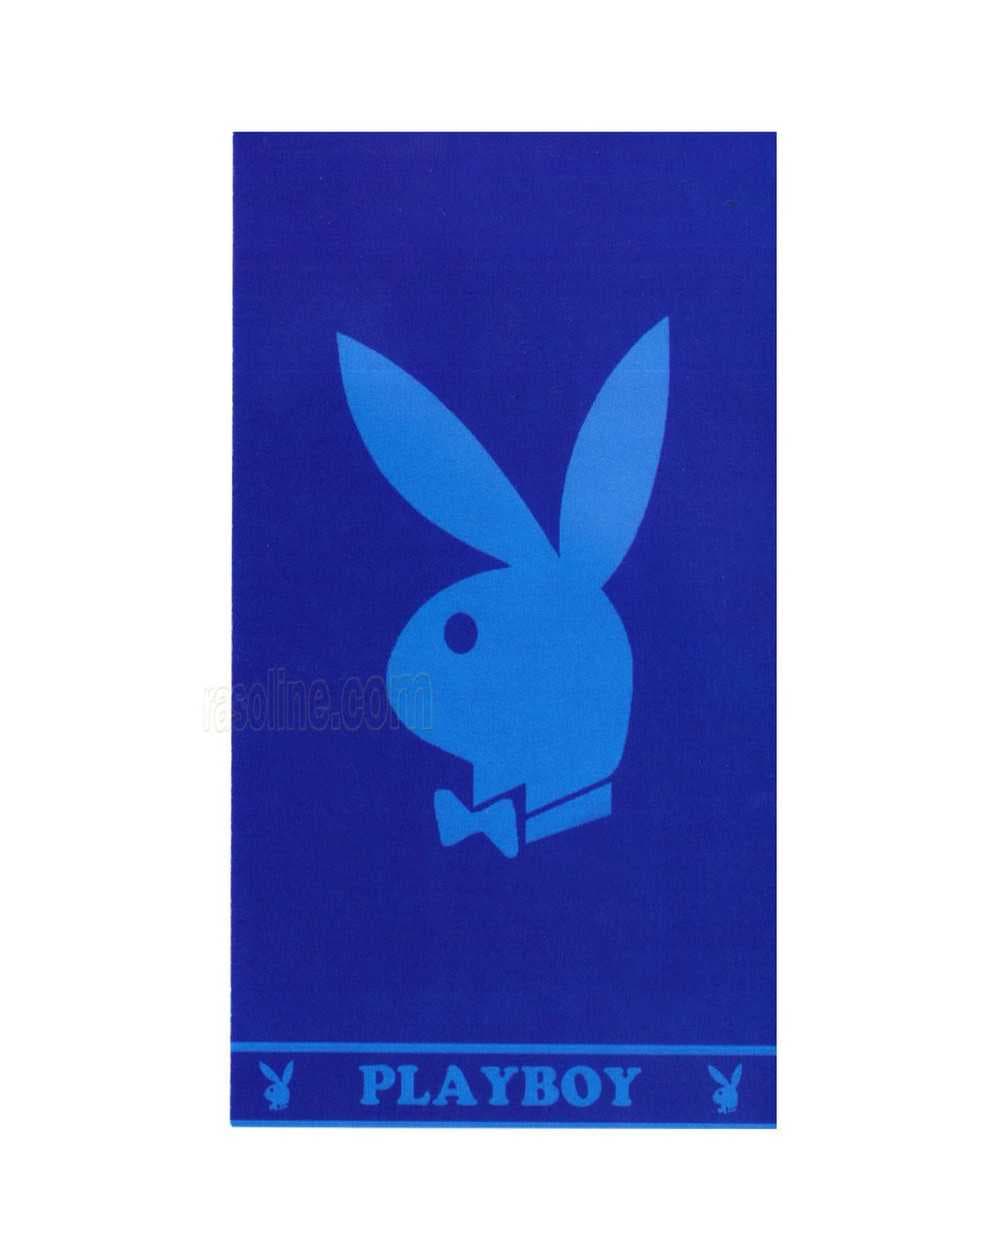 Playboy Bunny Strandtuch (Velours-Strandlaken) mit den Maßen 90 x 170 cm blau